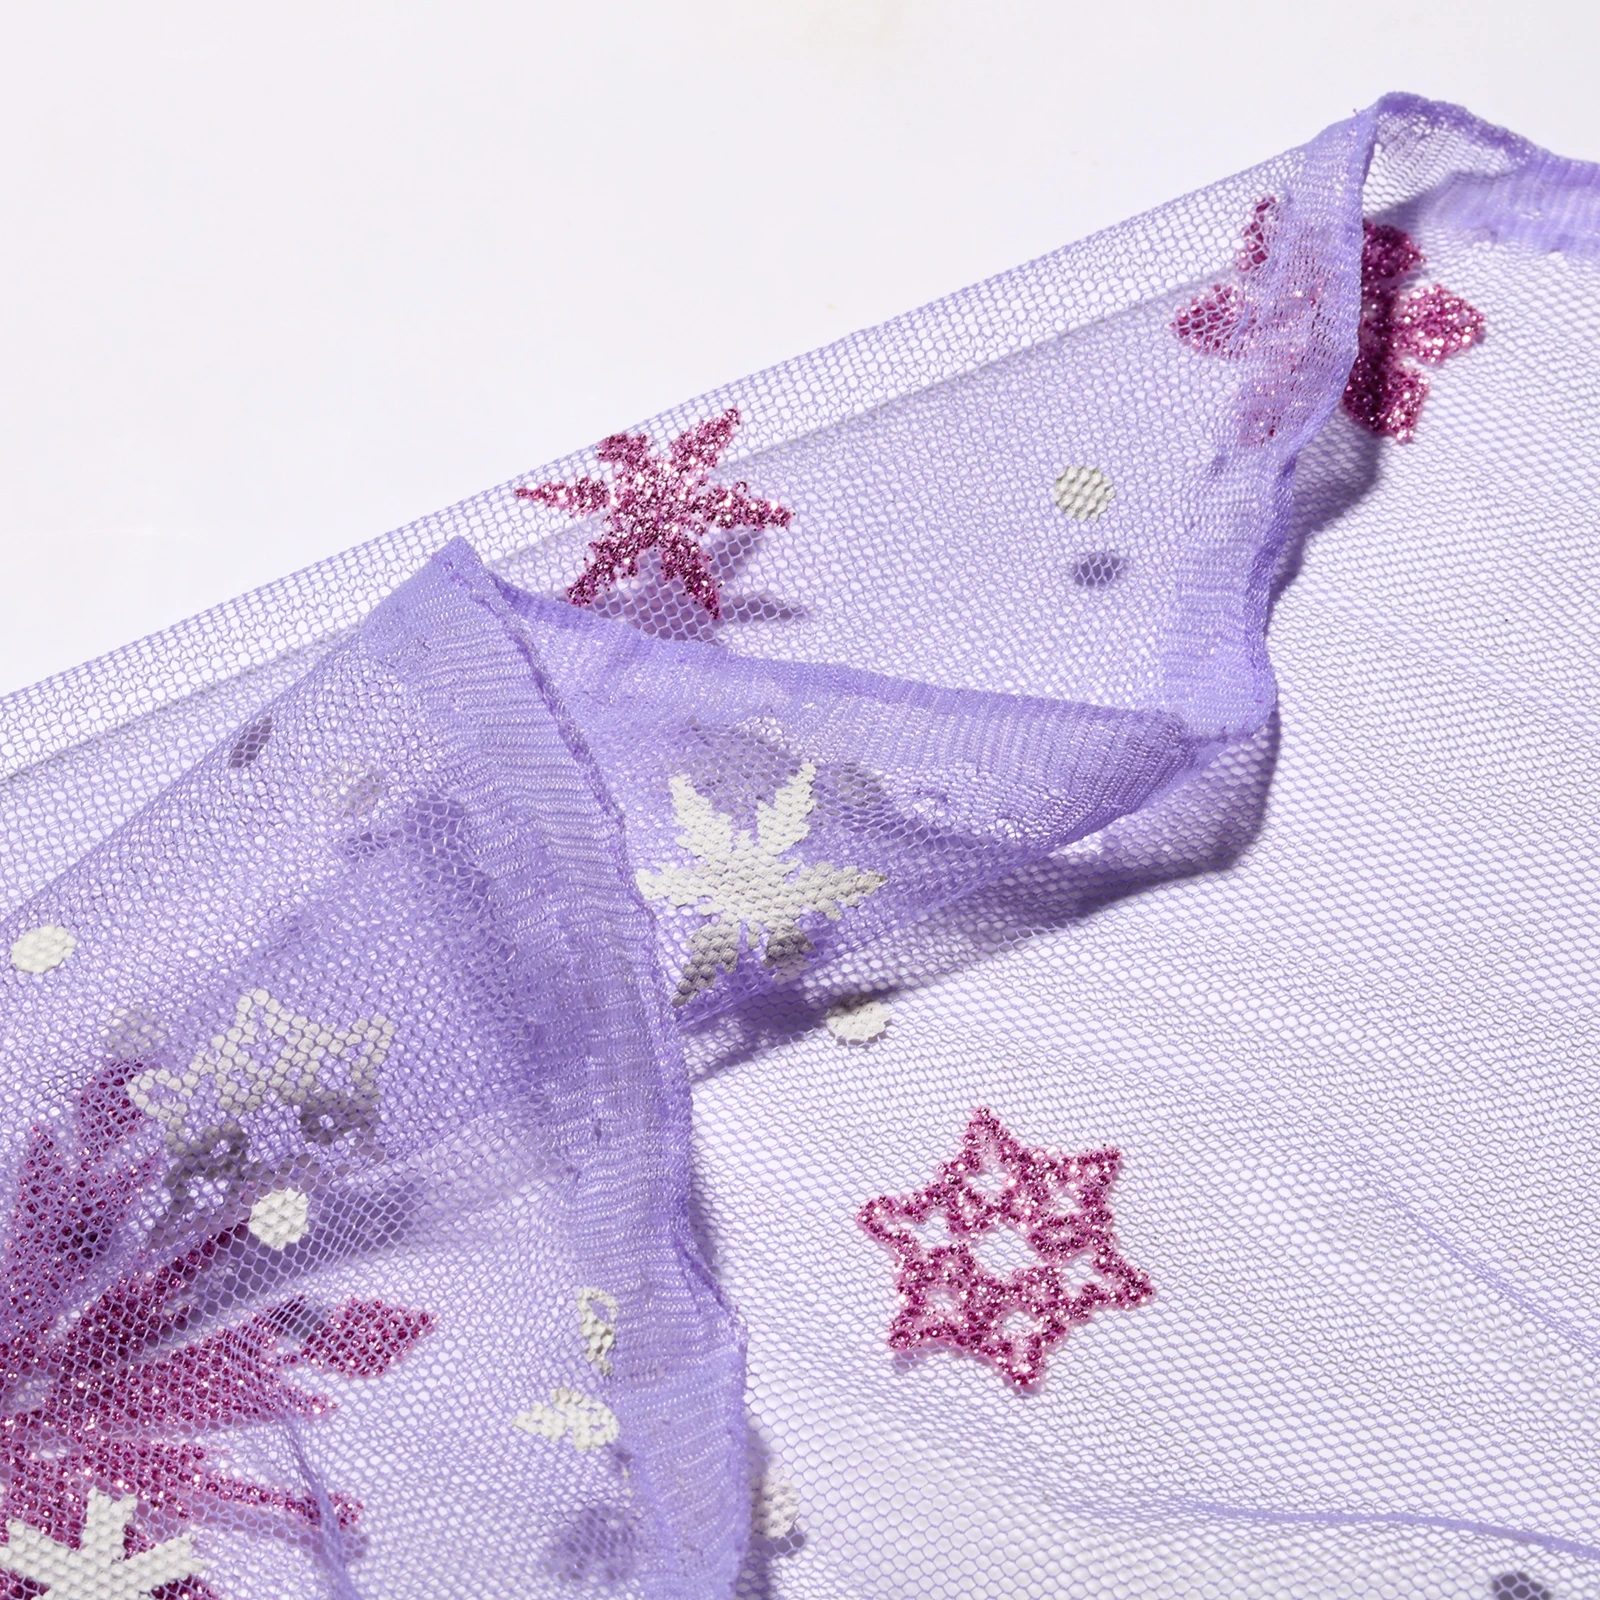 Hot sale high quality nice design purple snowflake printed tulle mesh fabric for wedding dress ect